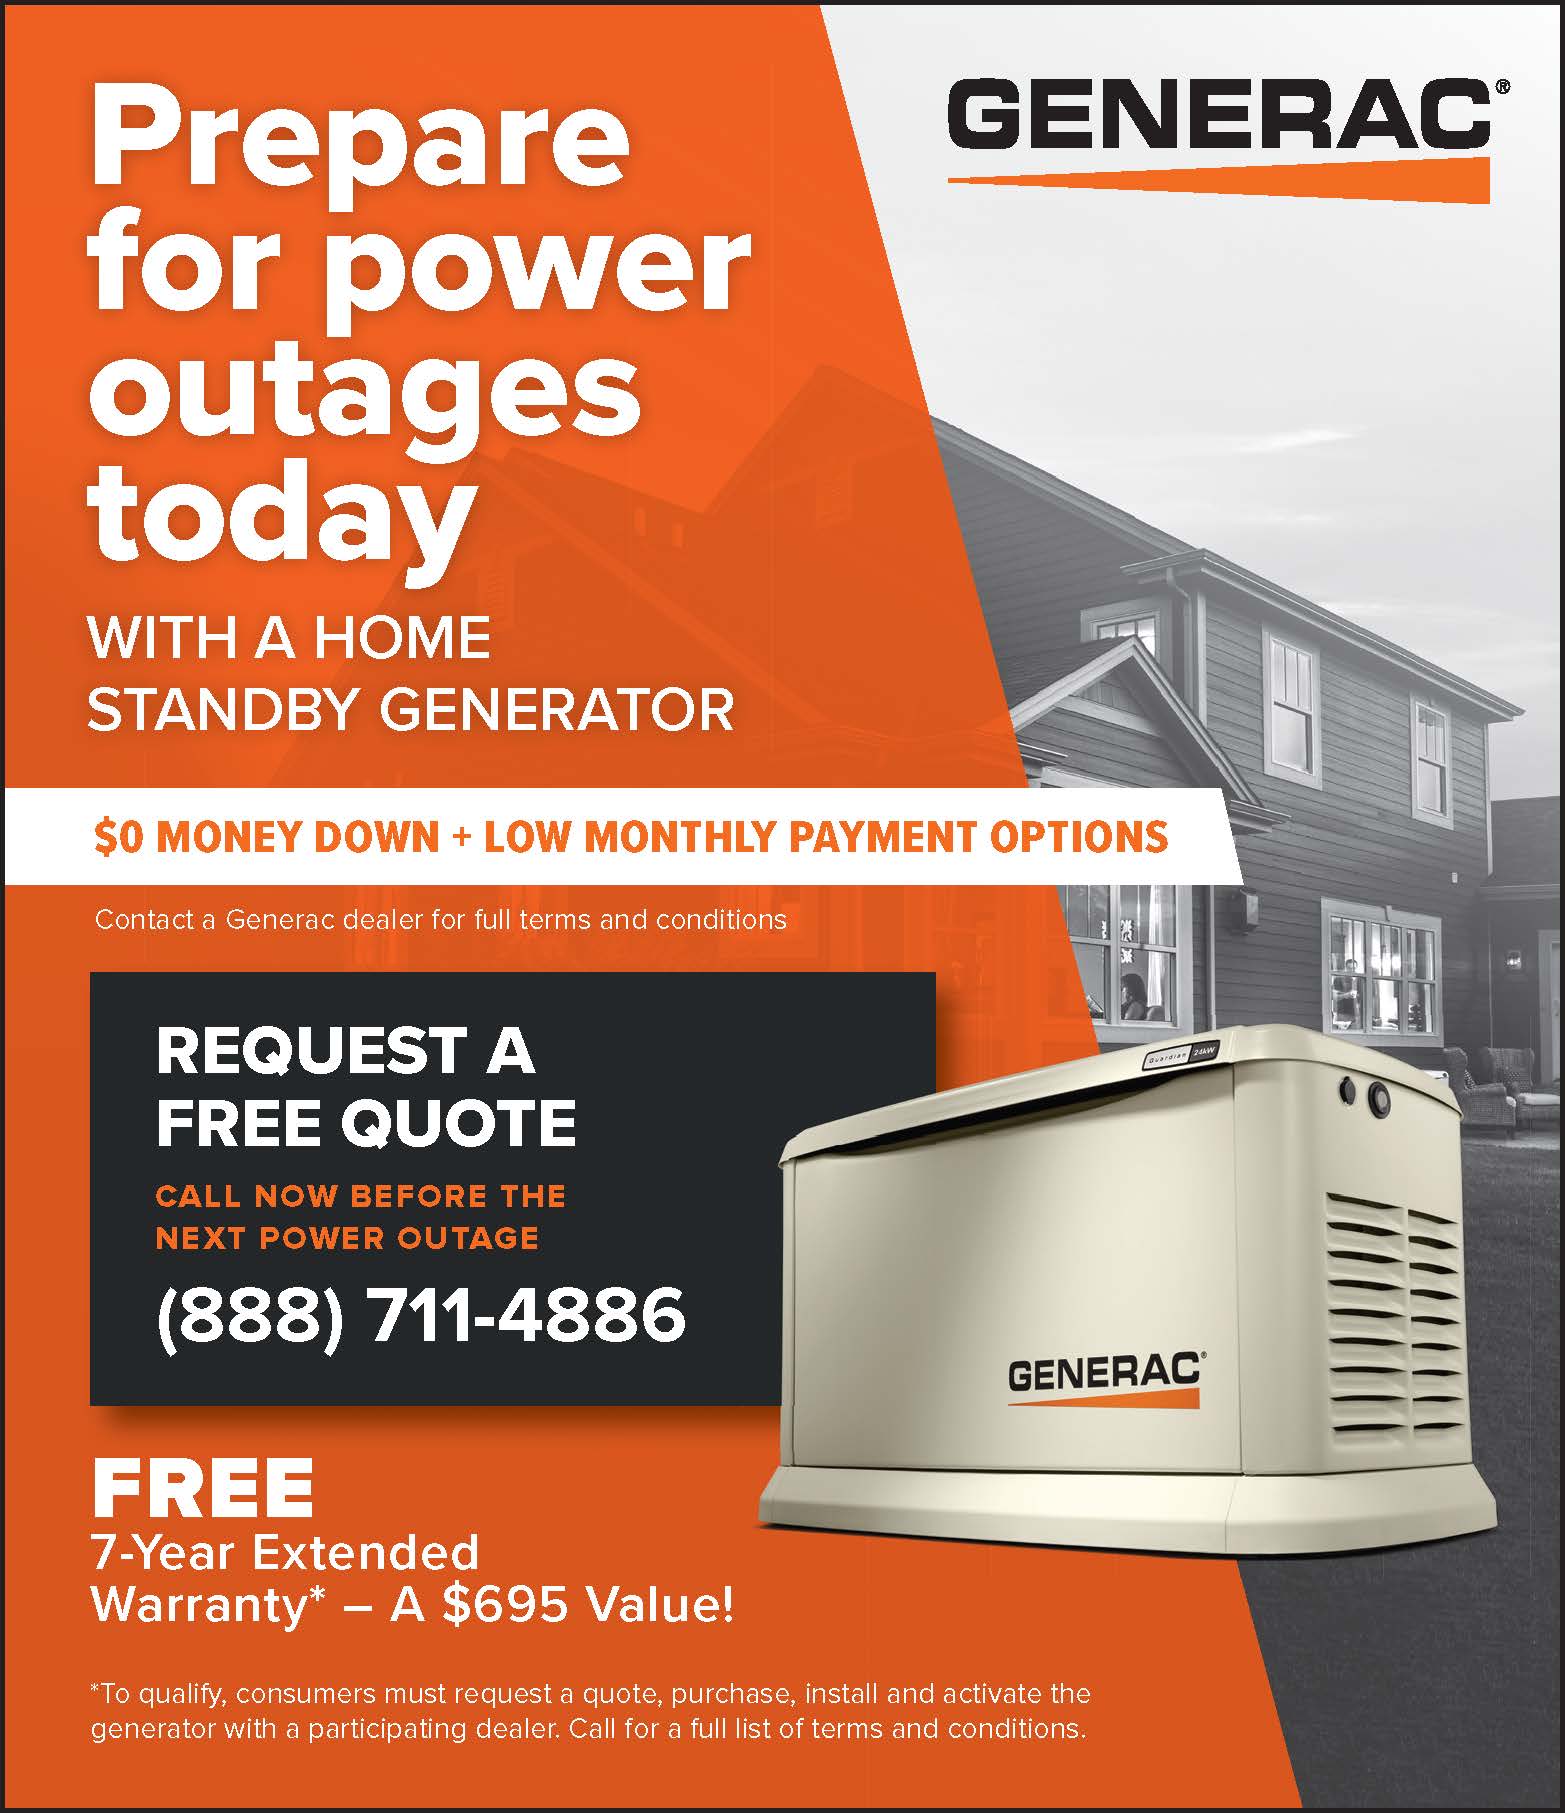 GENERAC Home Standby Generators